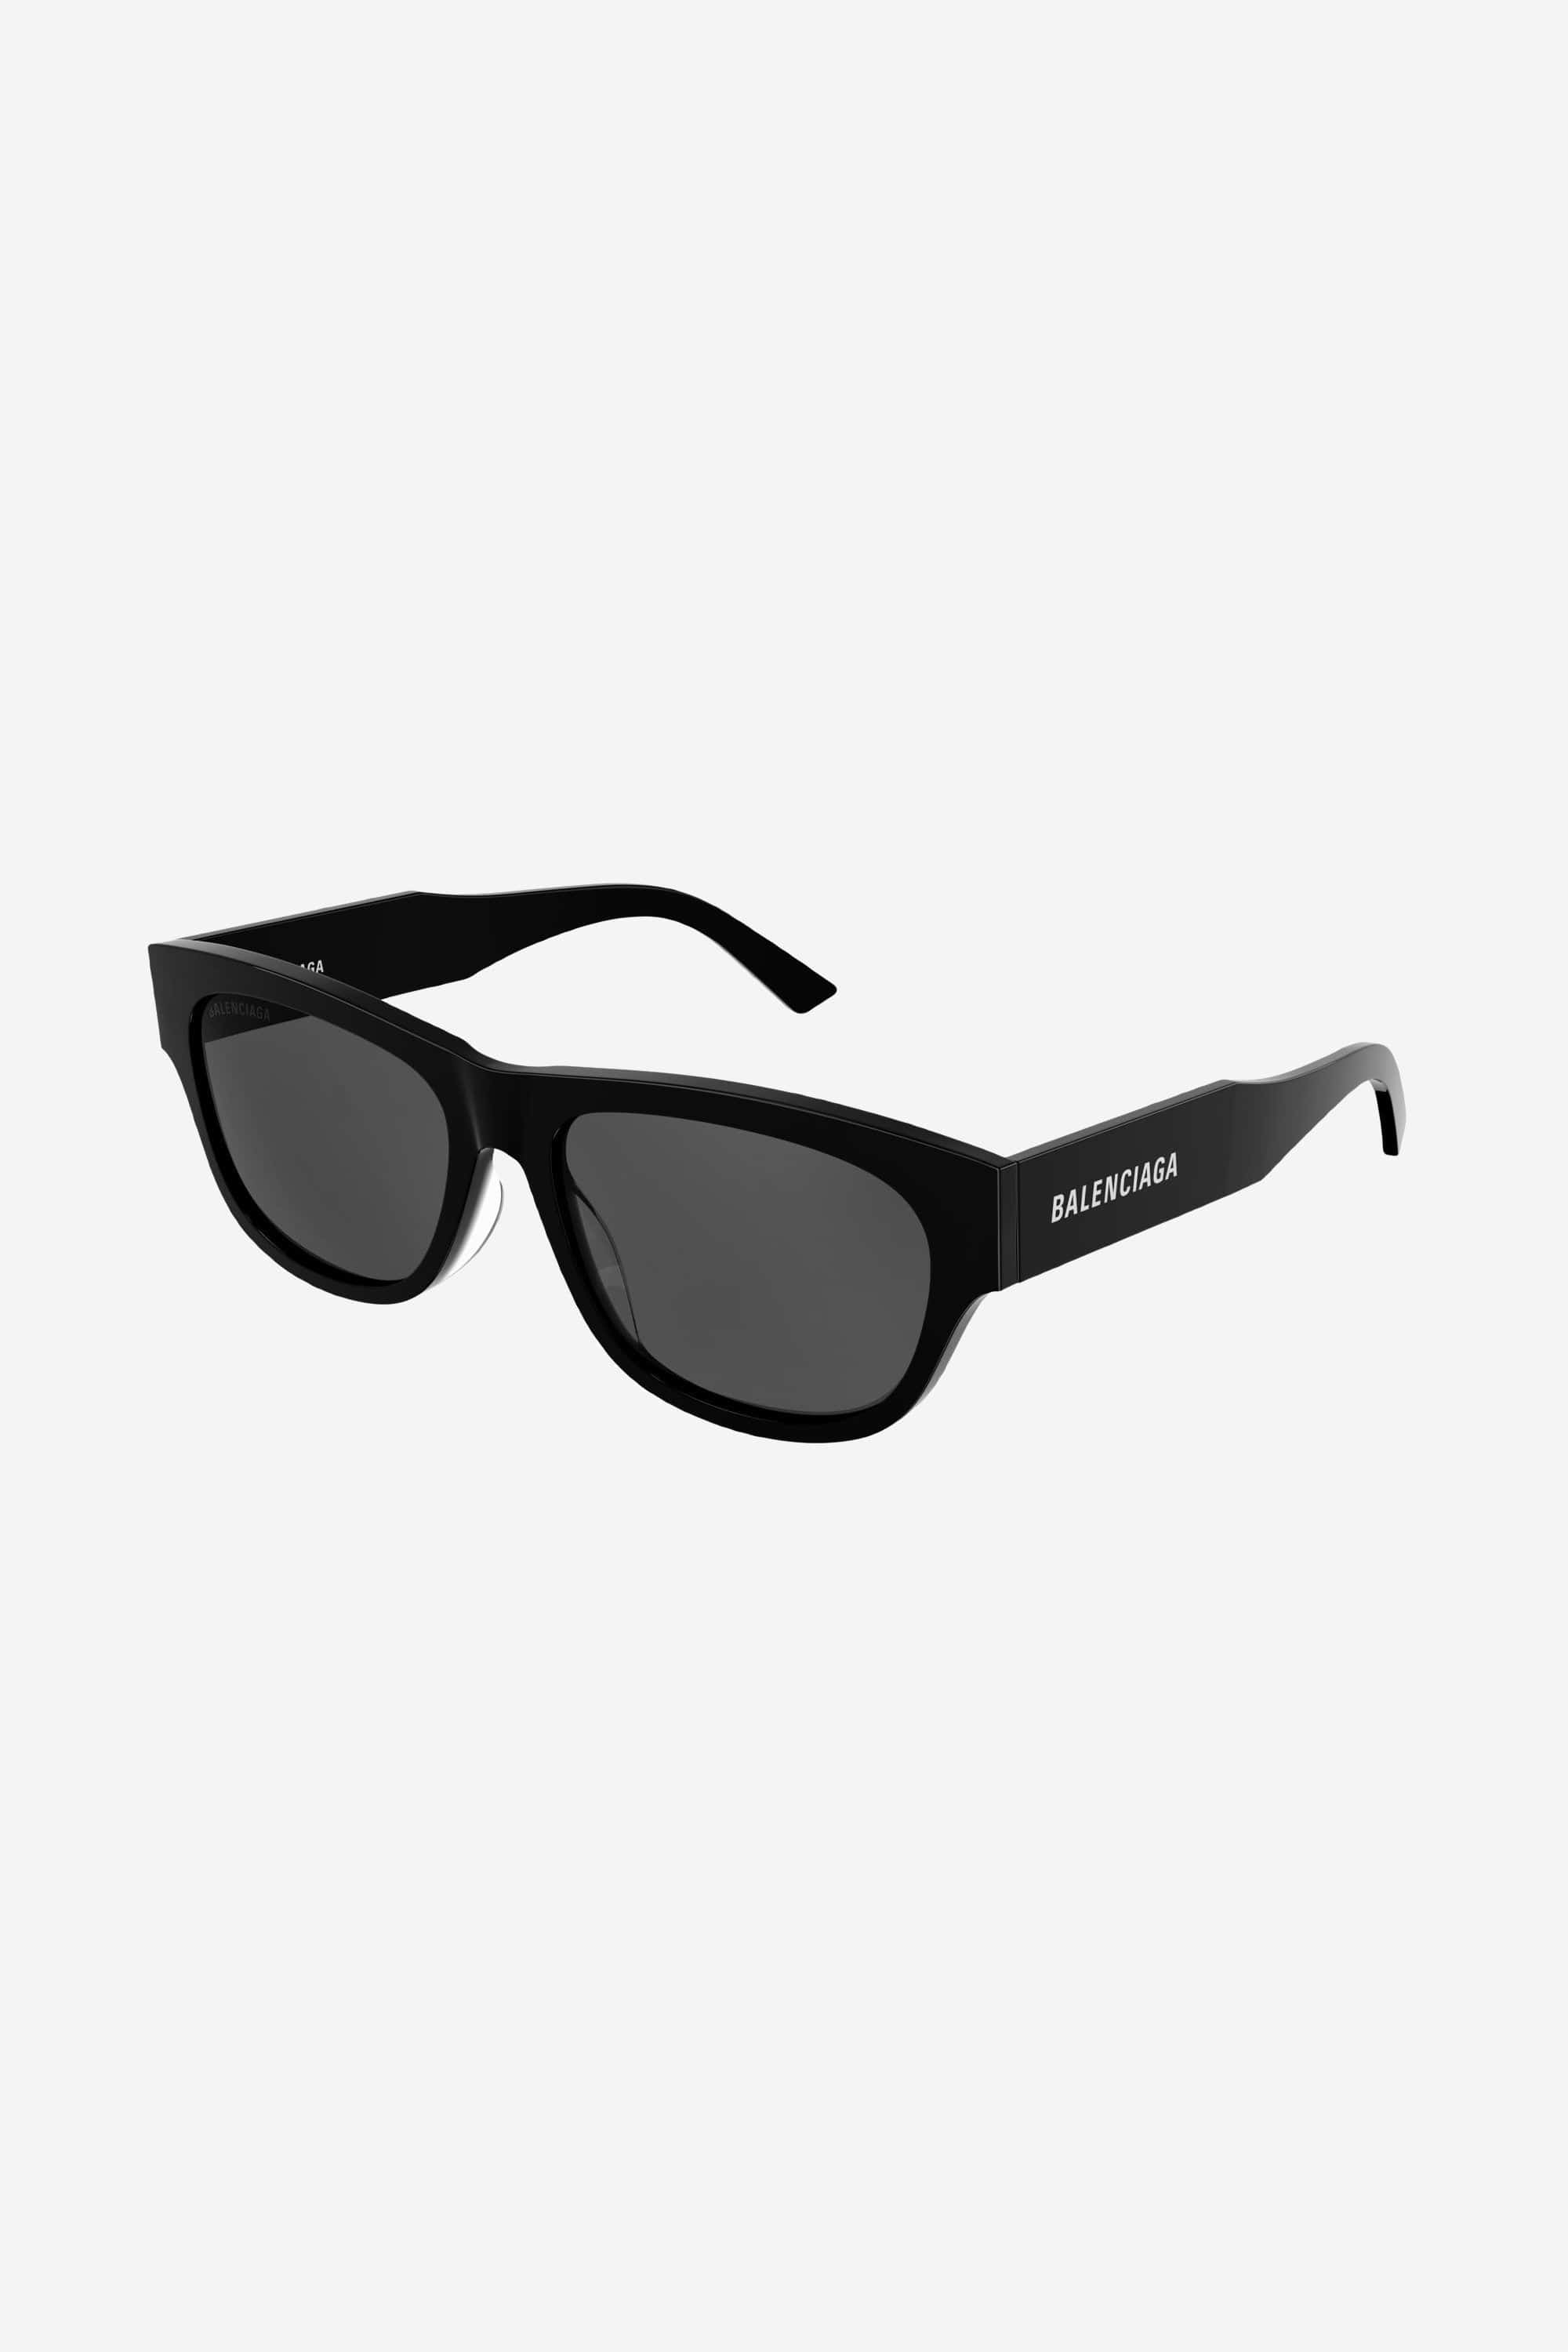 Balenciaga slim rectangular black sunglasses - Eyewear Club